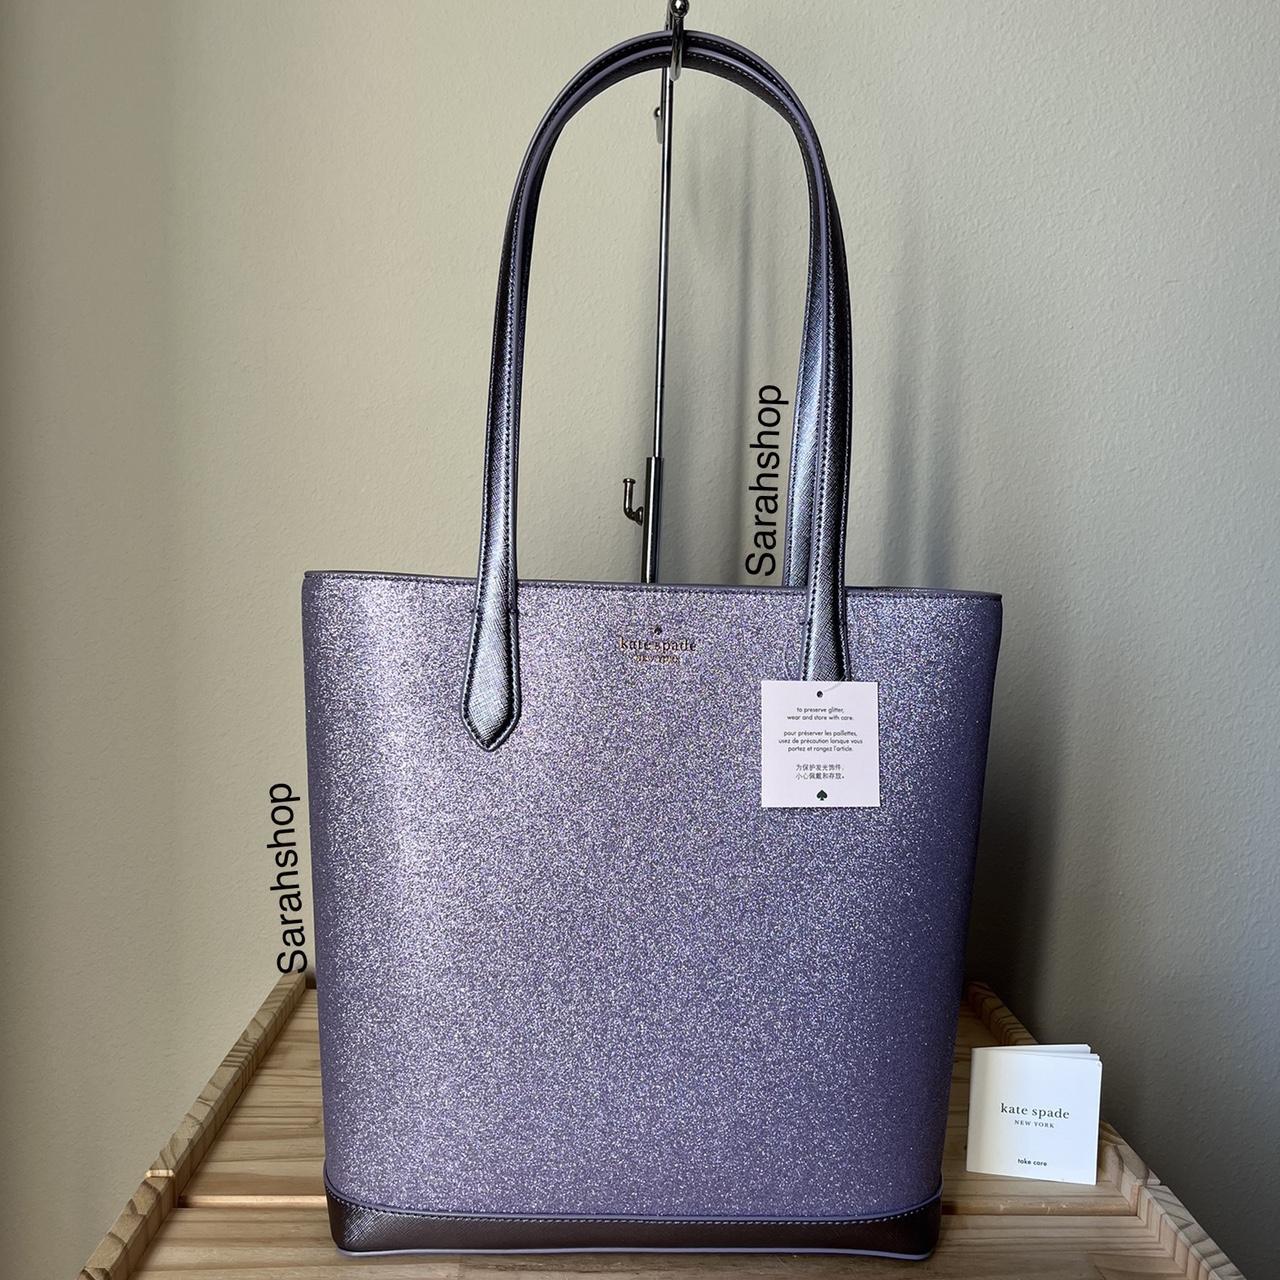 kate spade | Bags | Kate Spade Purple Glitter Purse Small | Poshmark